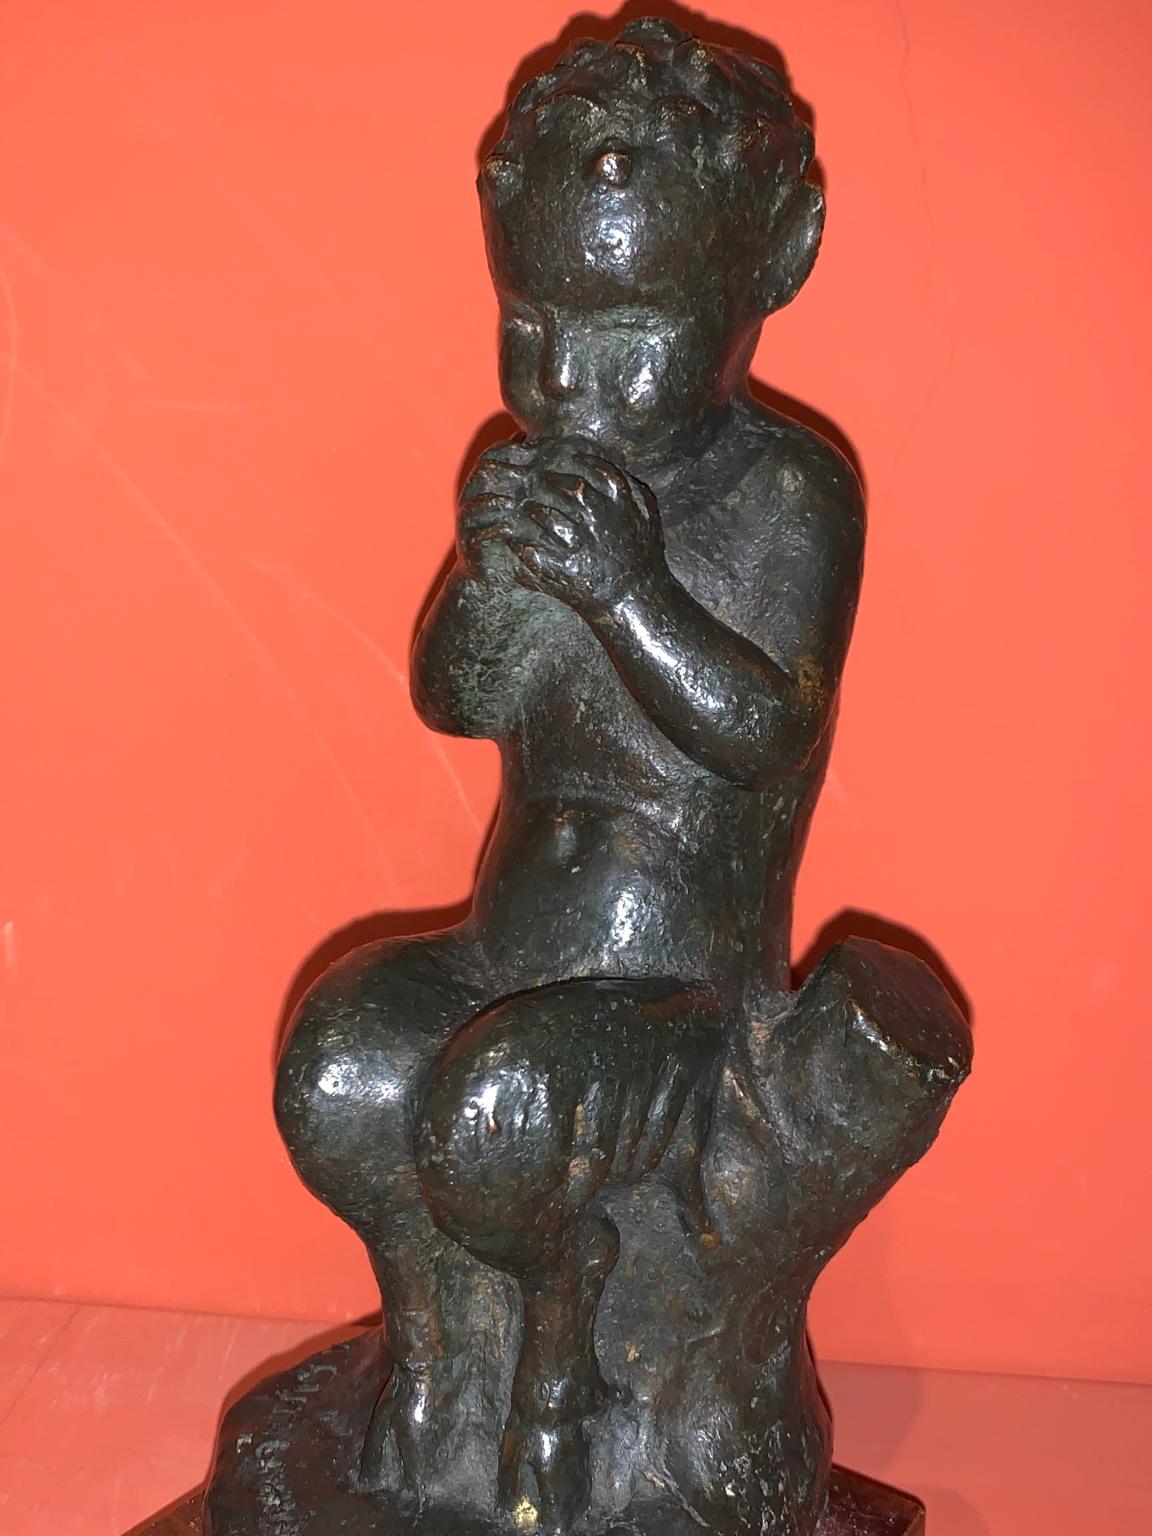 Rodolfo Castagnino Figurative Sculpture - 1930s bronze faun child signed at base 